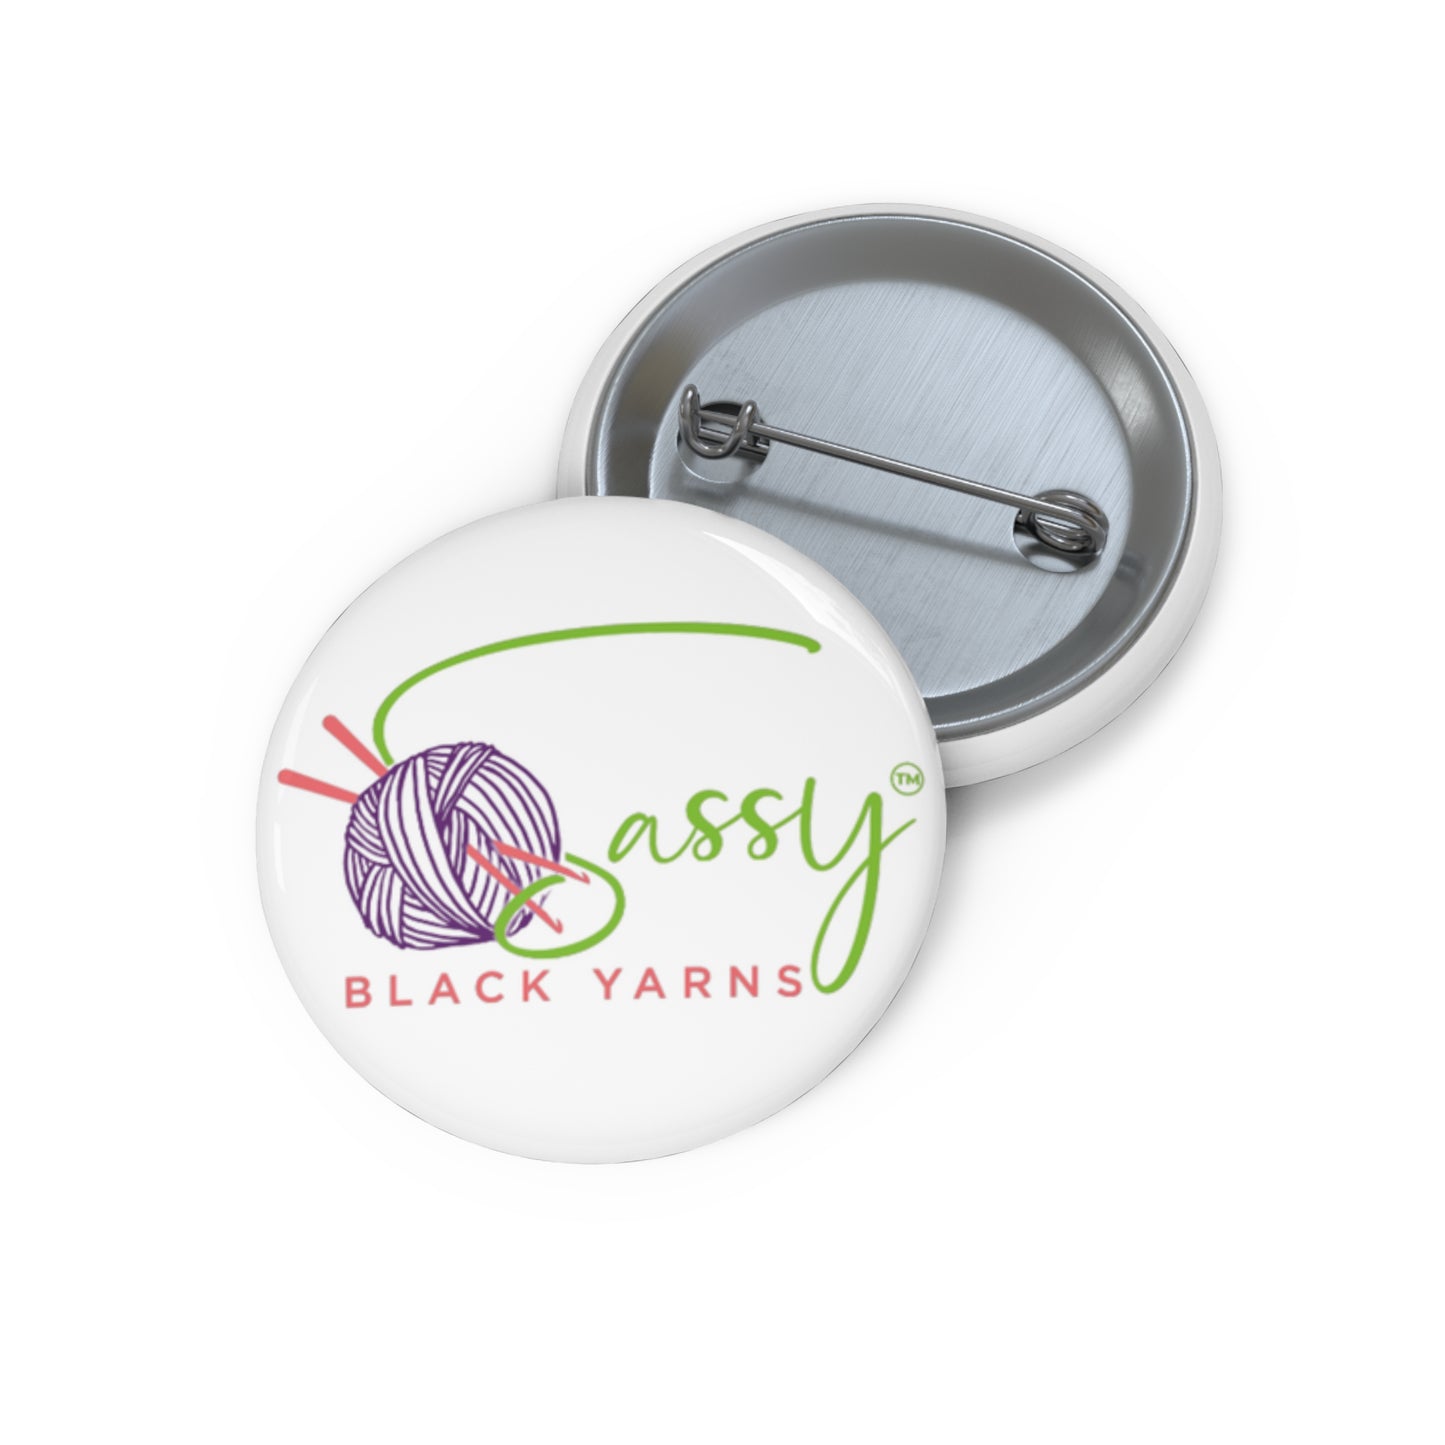 Sassy Black Yarns - Custom Pin Buttons